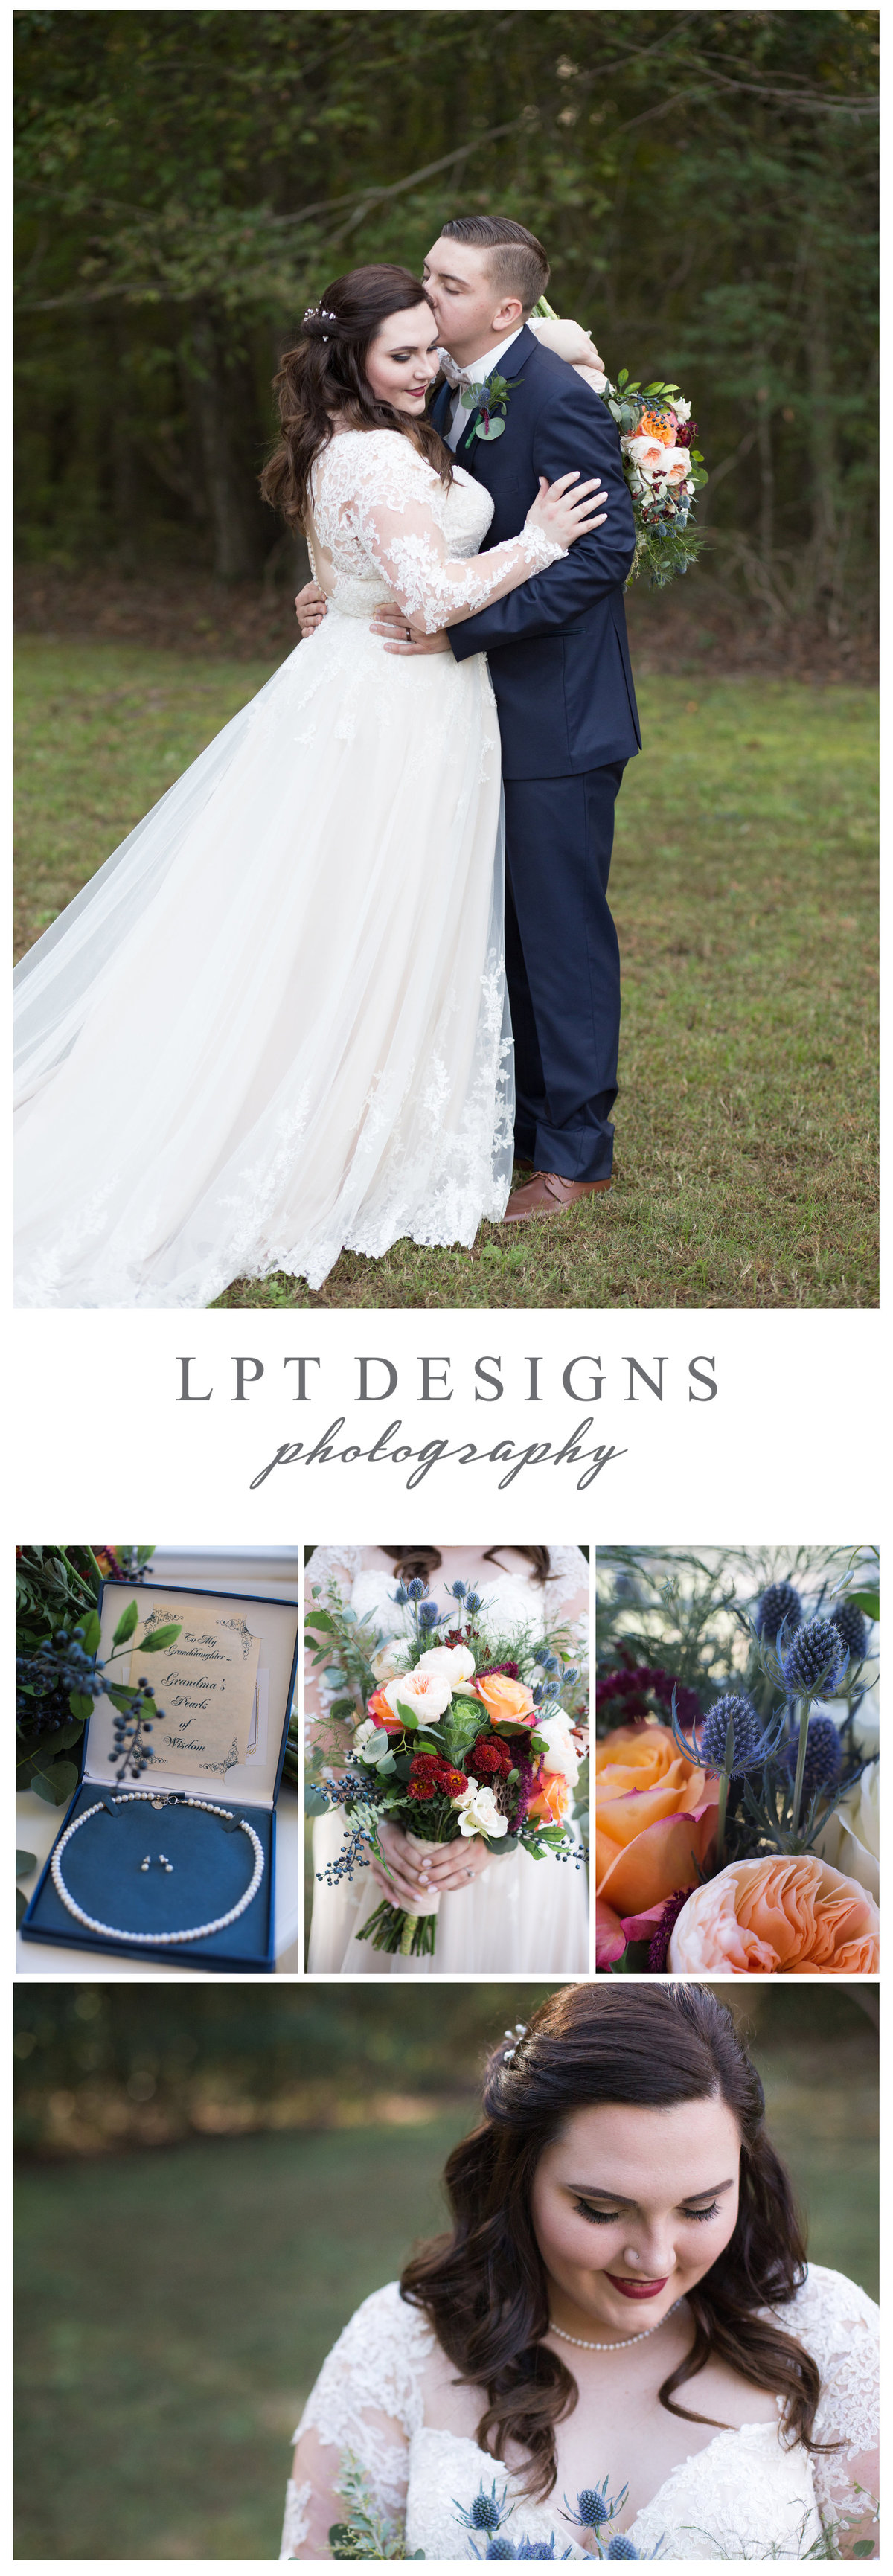 LPT Designs Photography Lydia Thrift Gadsden Alabama Fine Art Wedding Photographer LJ 2